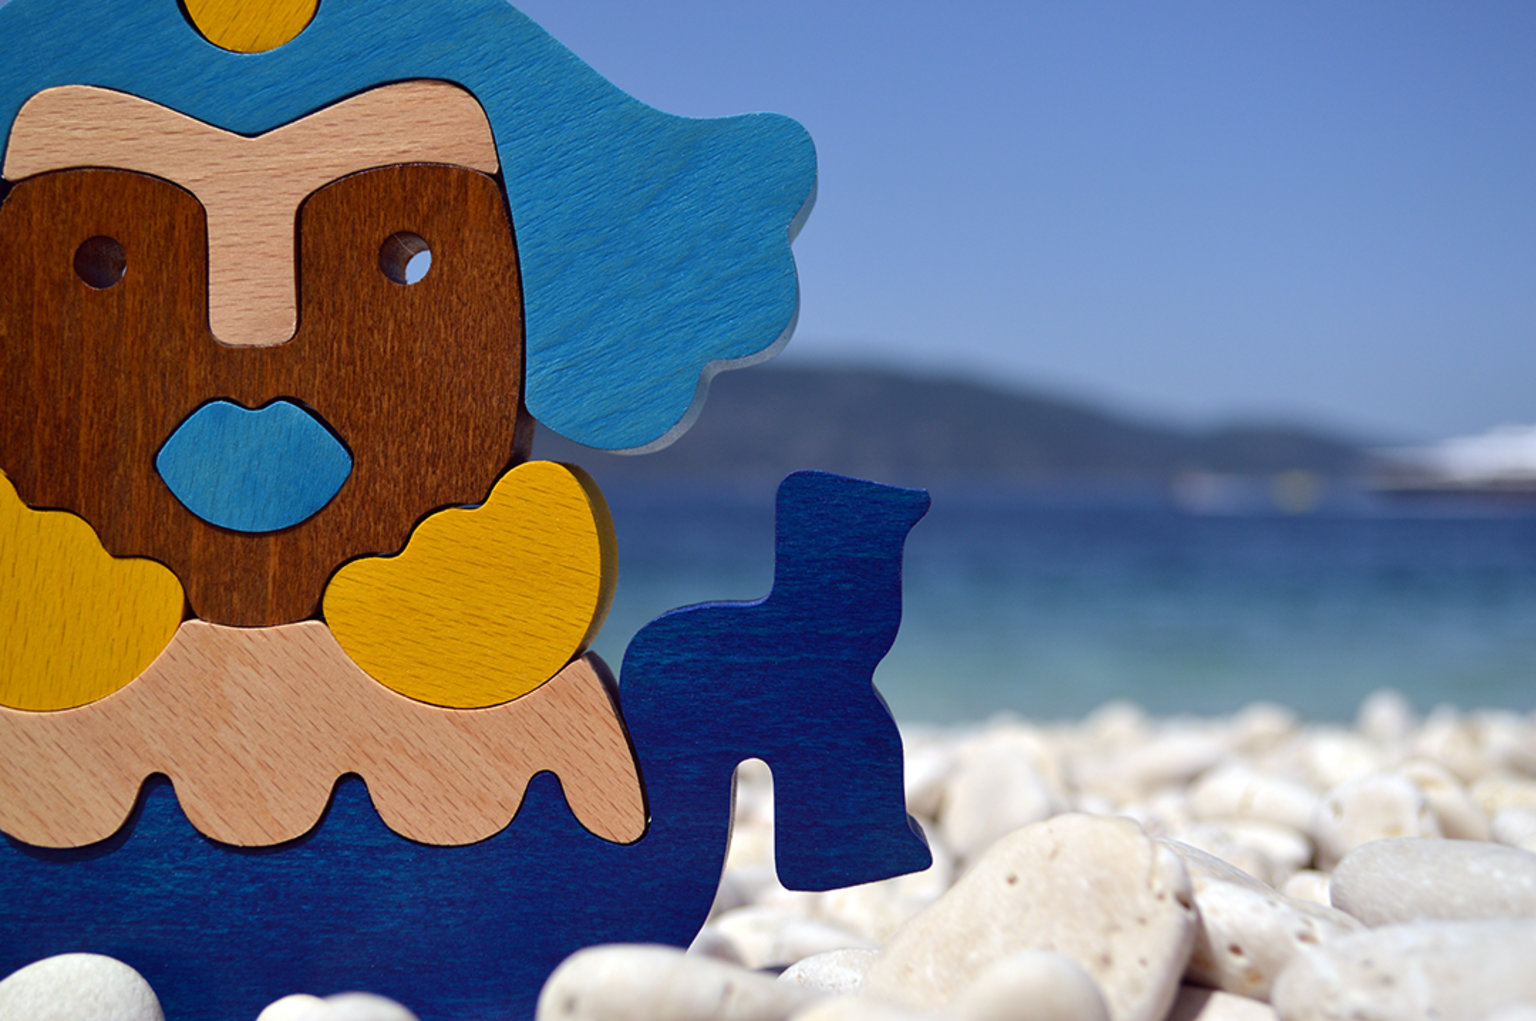 Wooden puzzle "Mermaid"